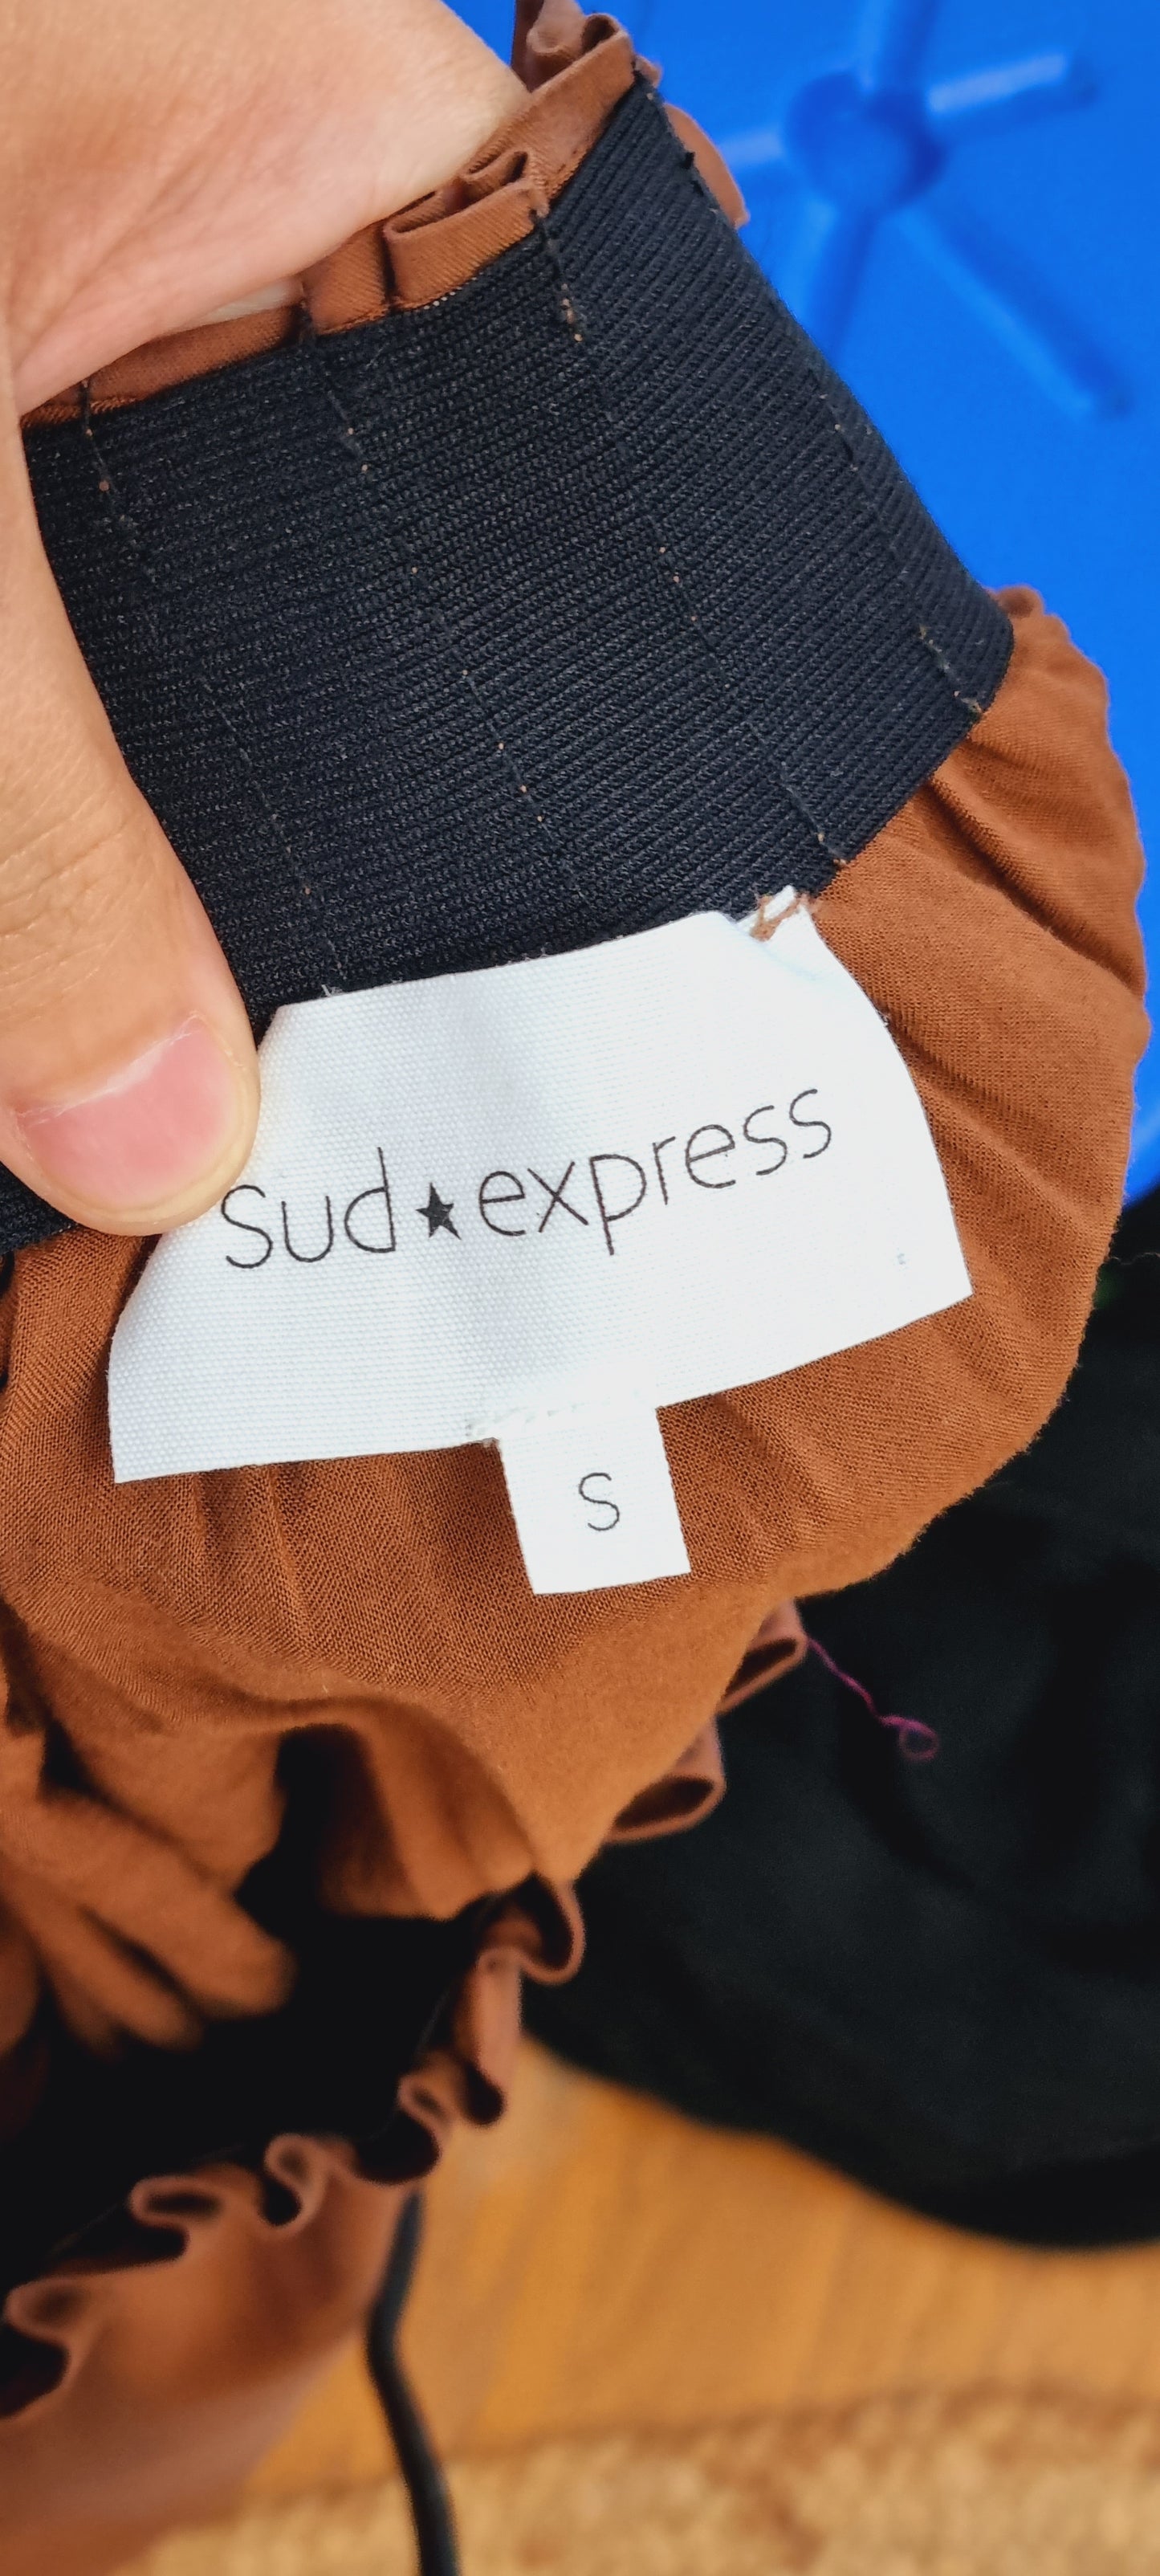 Jupe Sud Express